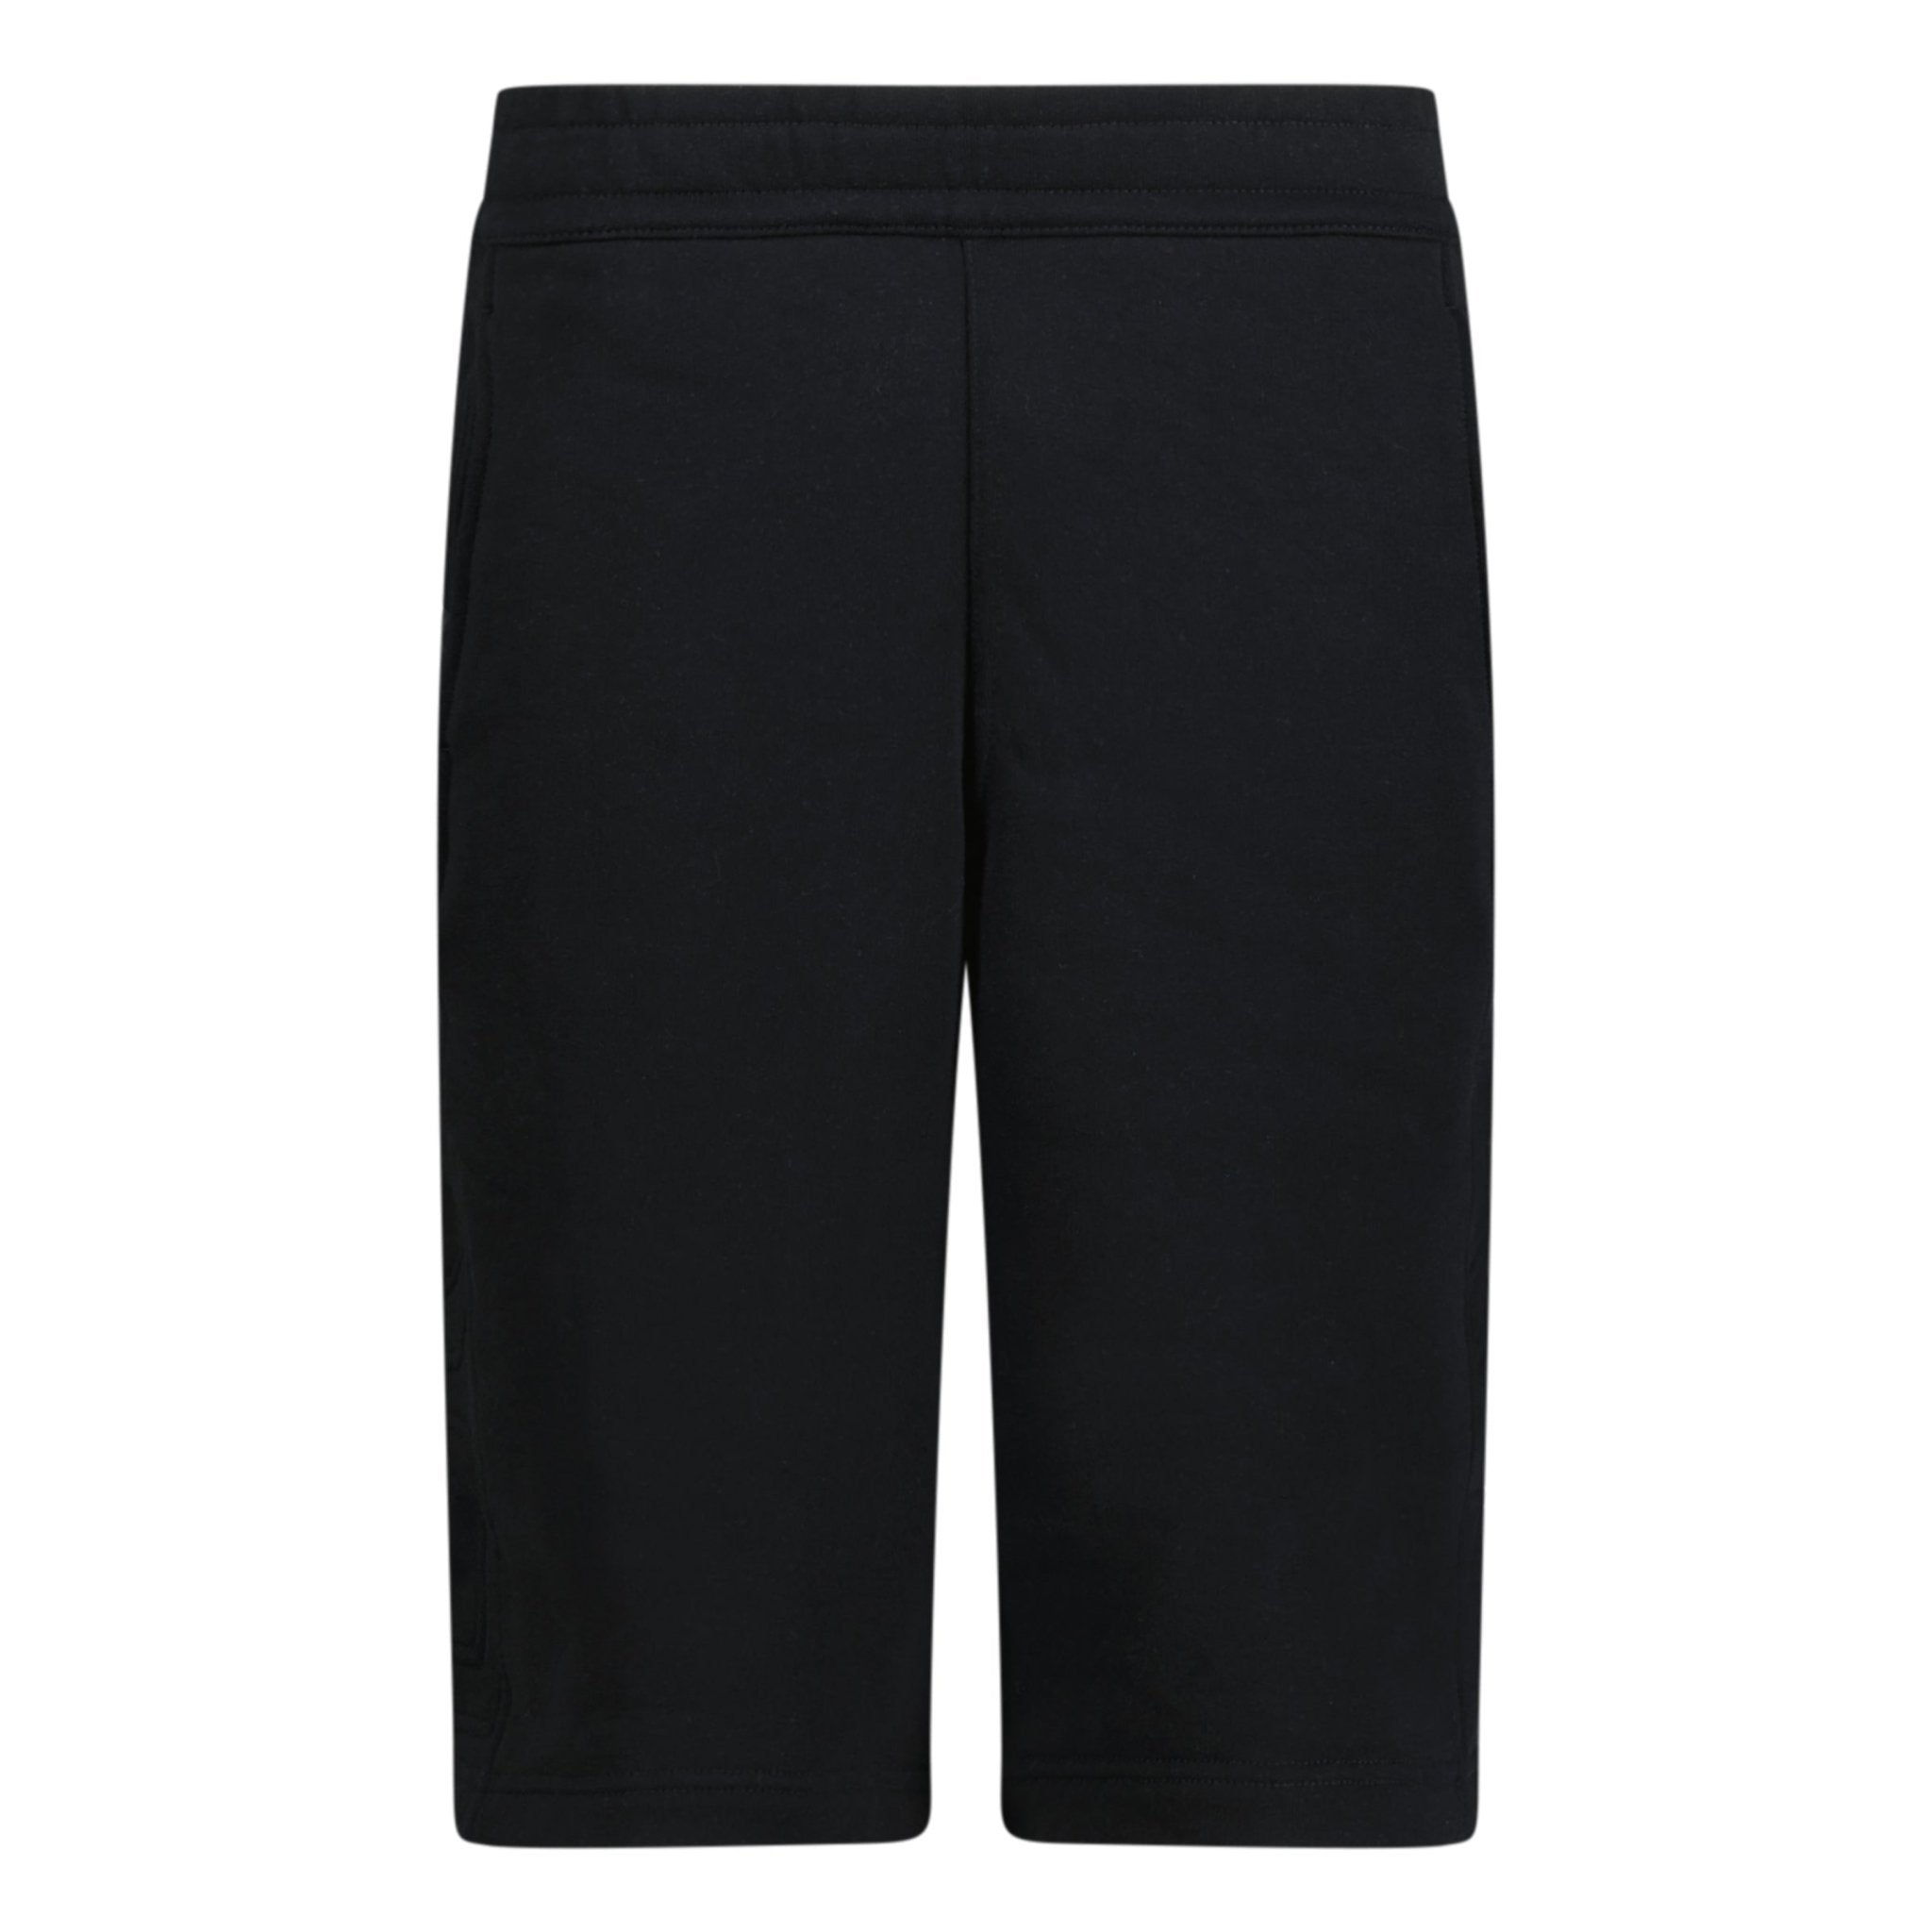 Burberry 'Phelix' Cotton Shorts Black